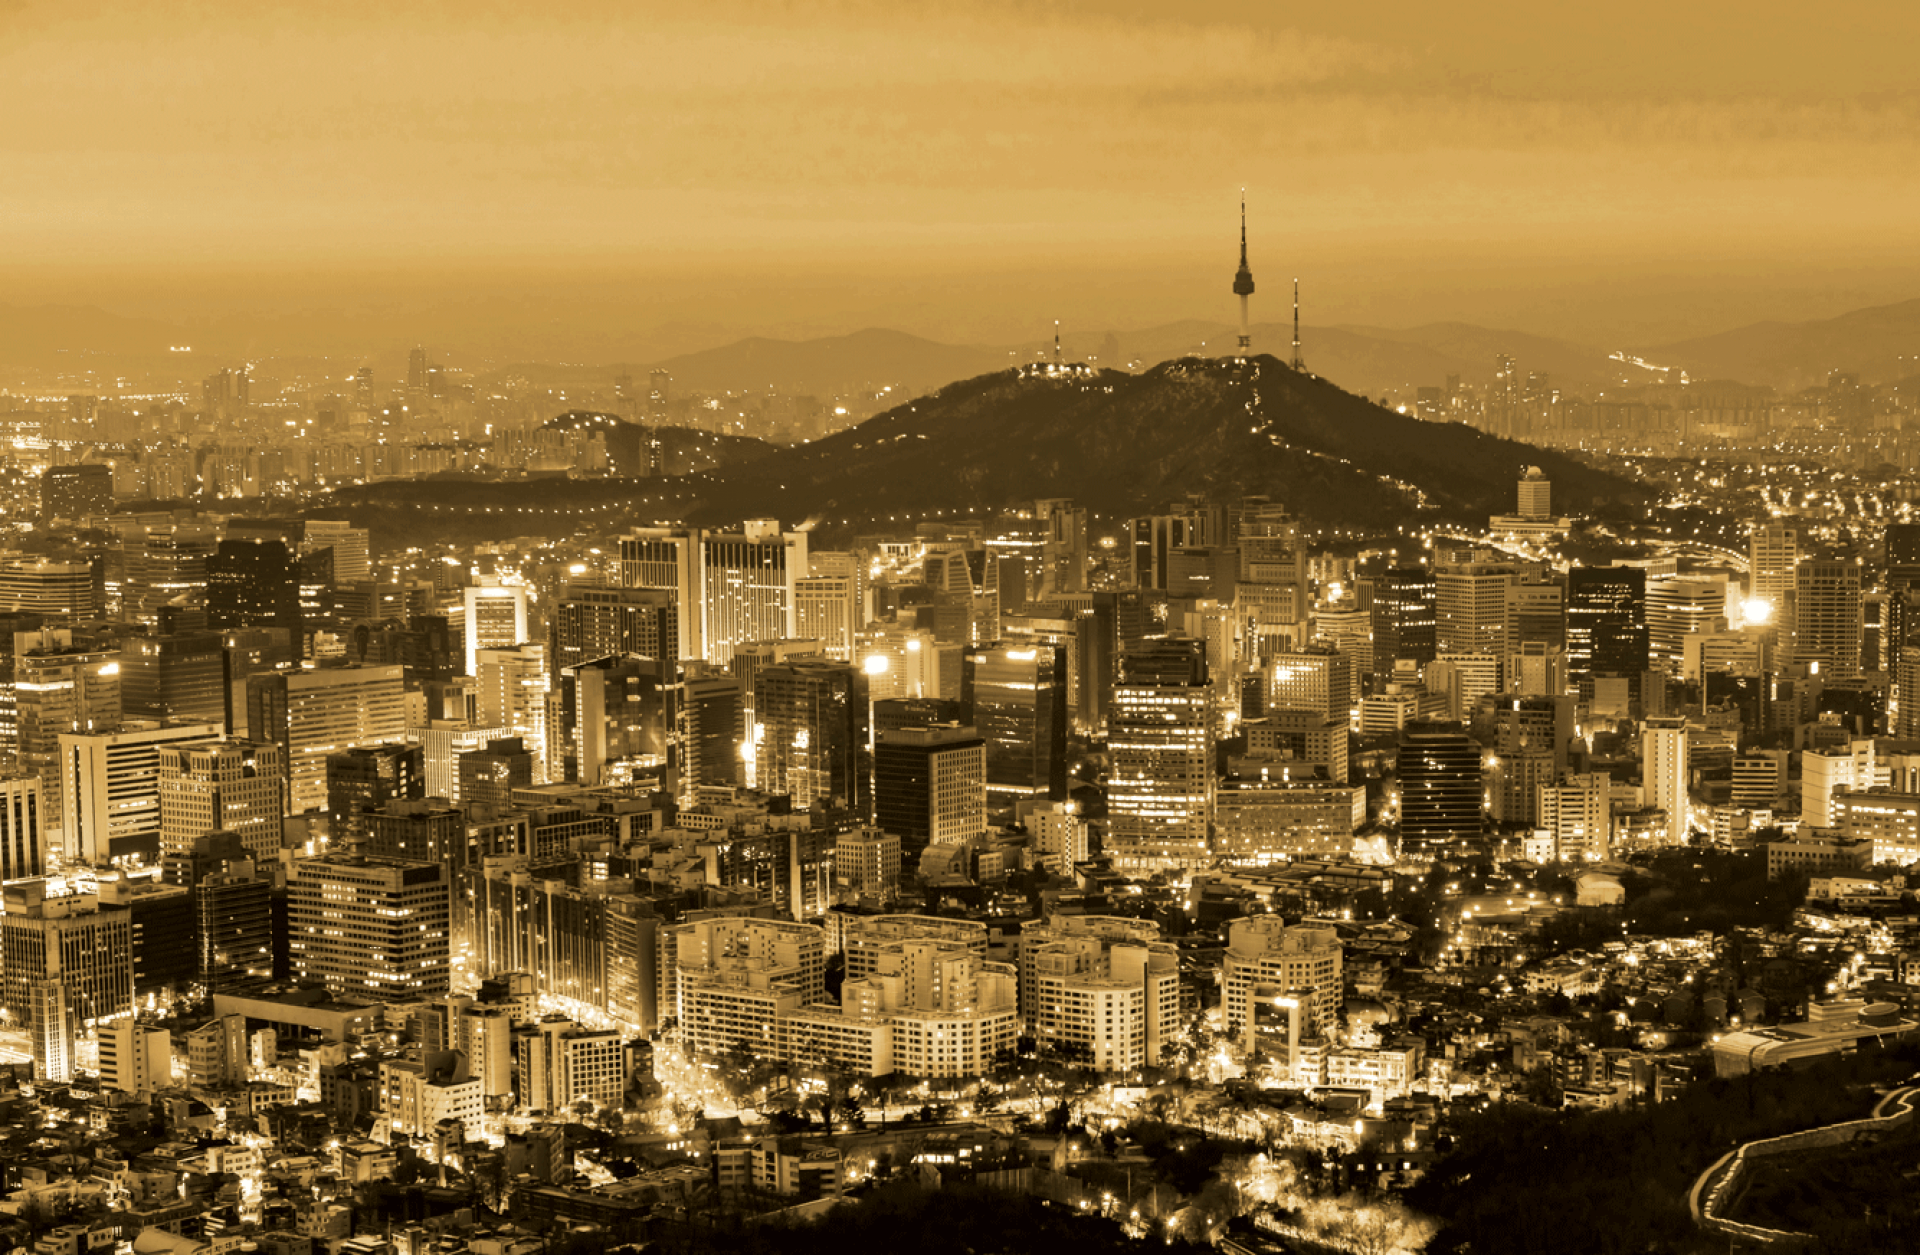 As dusk falls over Seoul, South Korea's bustling capital, the city's skyline comes to life.